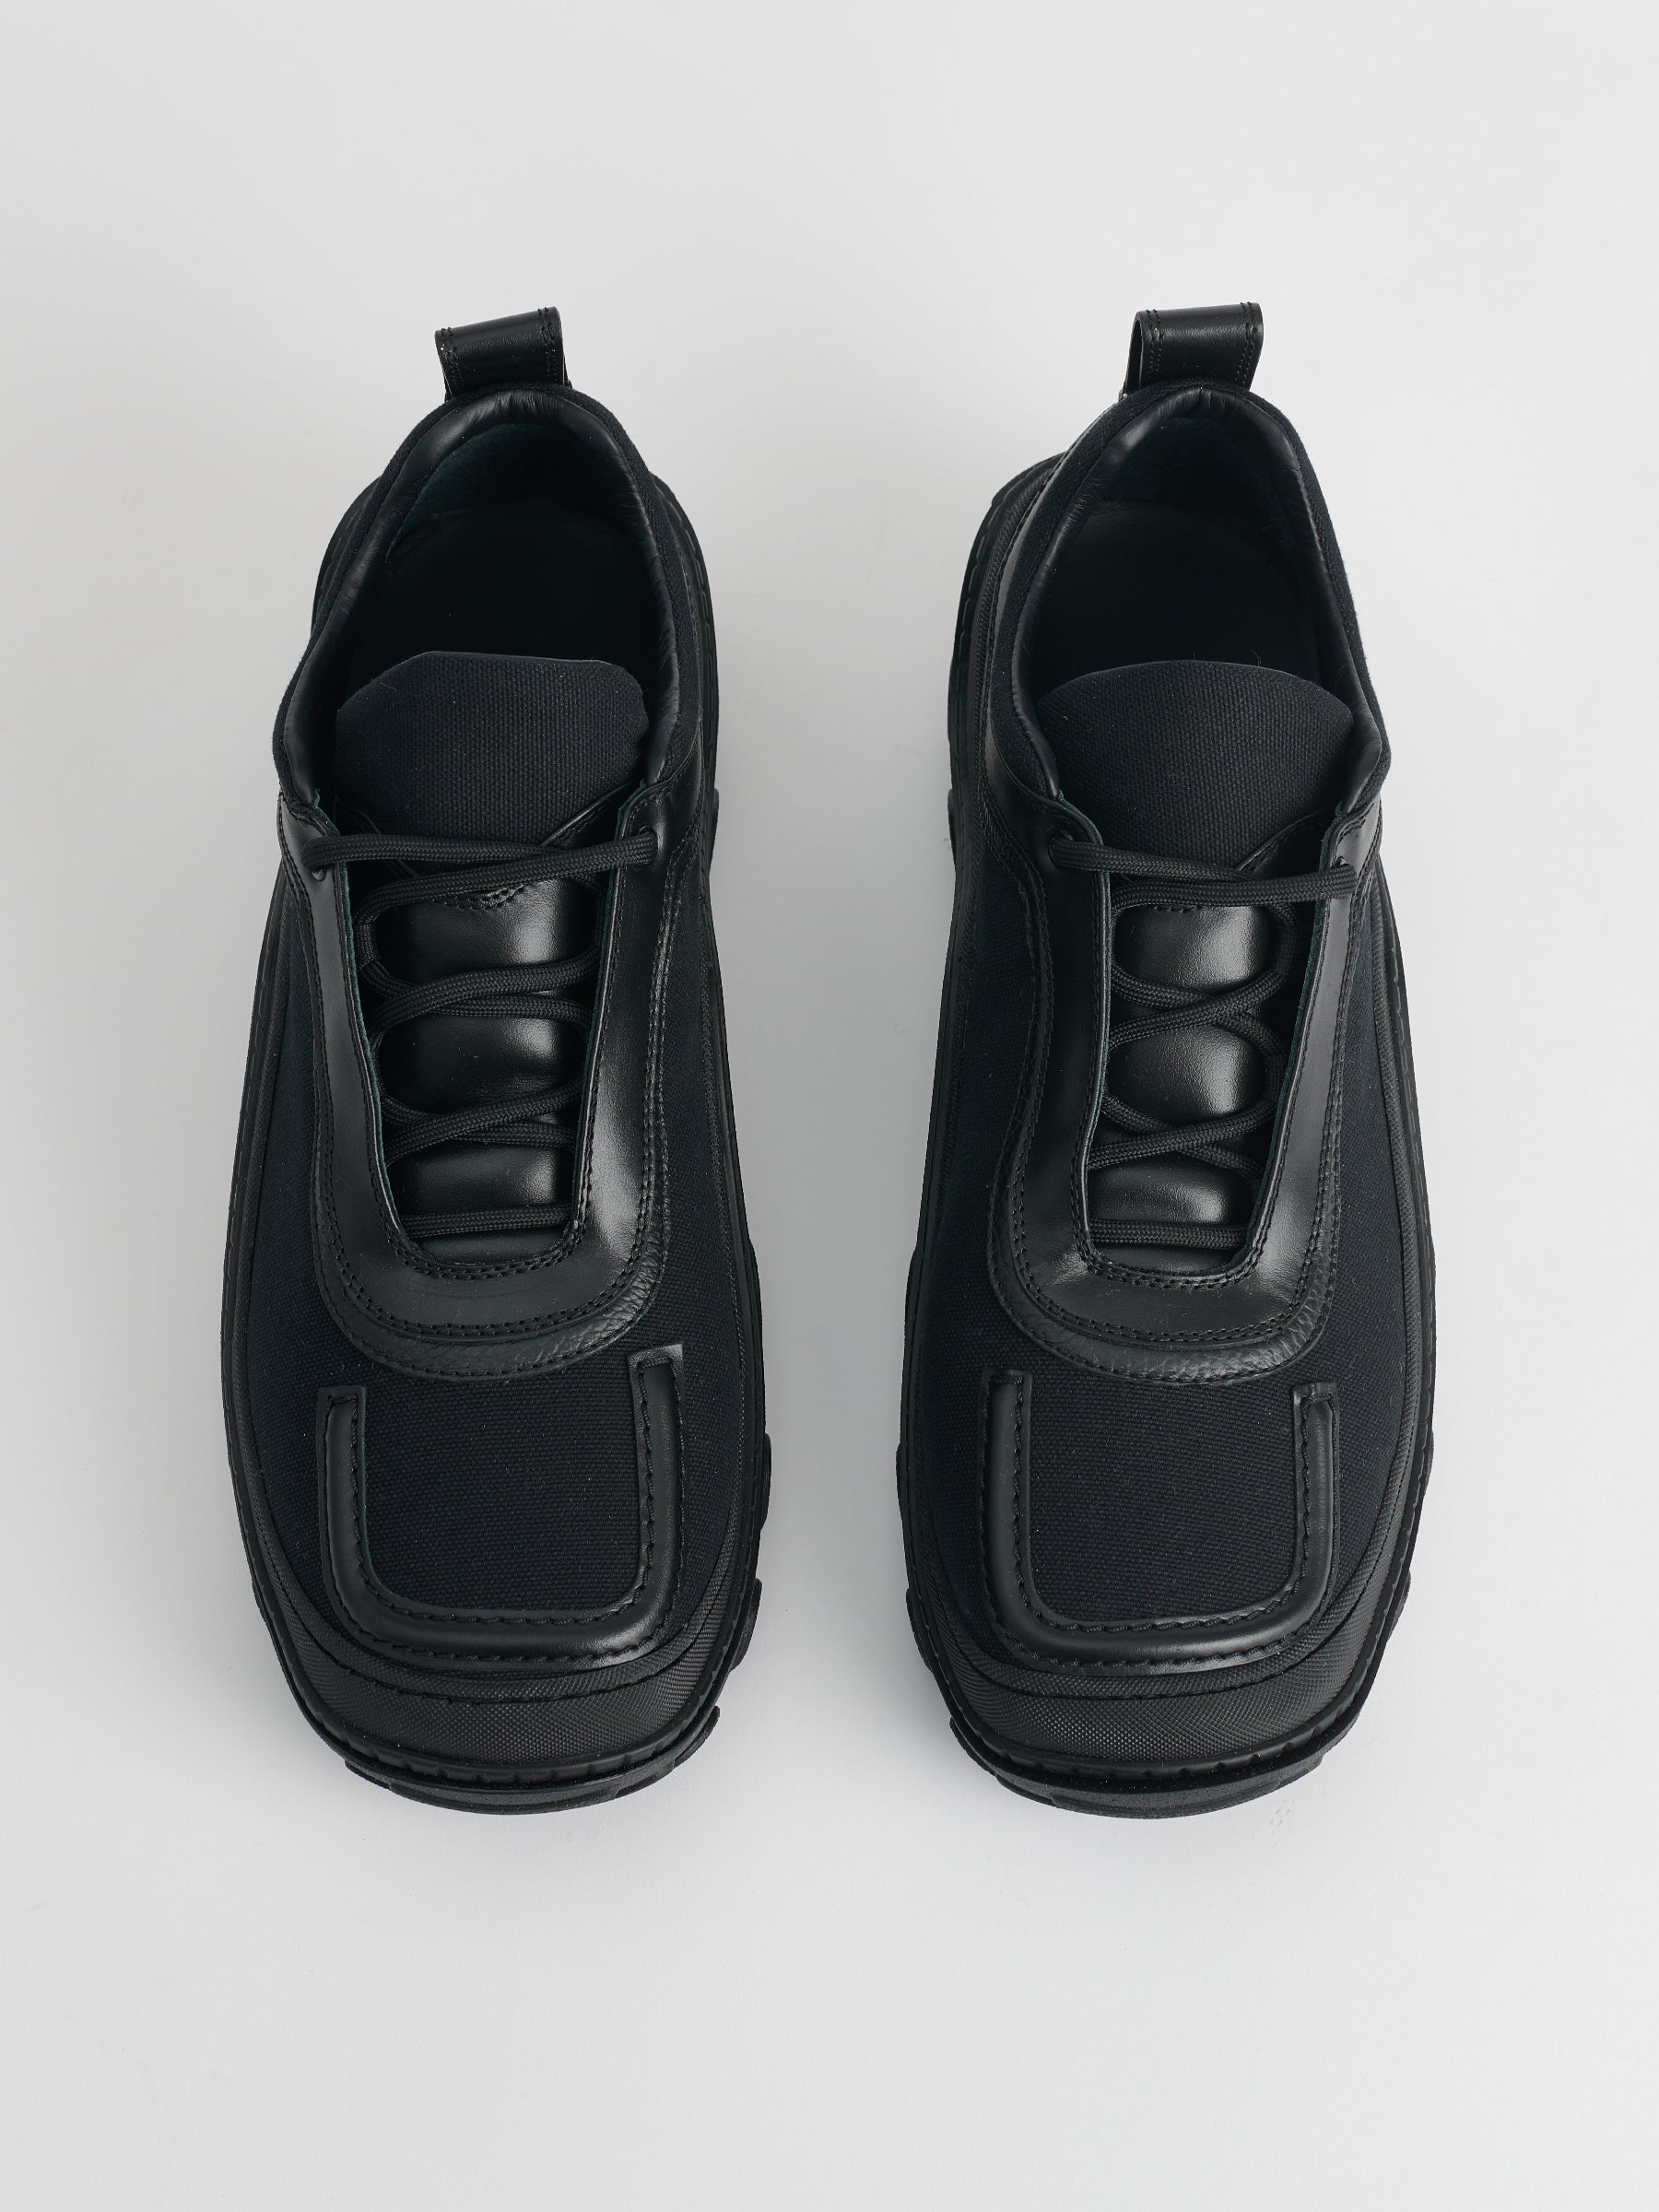 Kiko Kostadinov Tonkin Canvas Shoes Black Slate